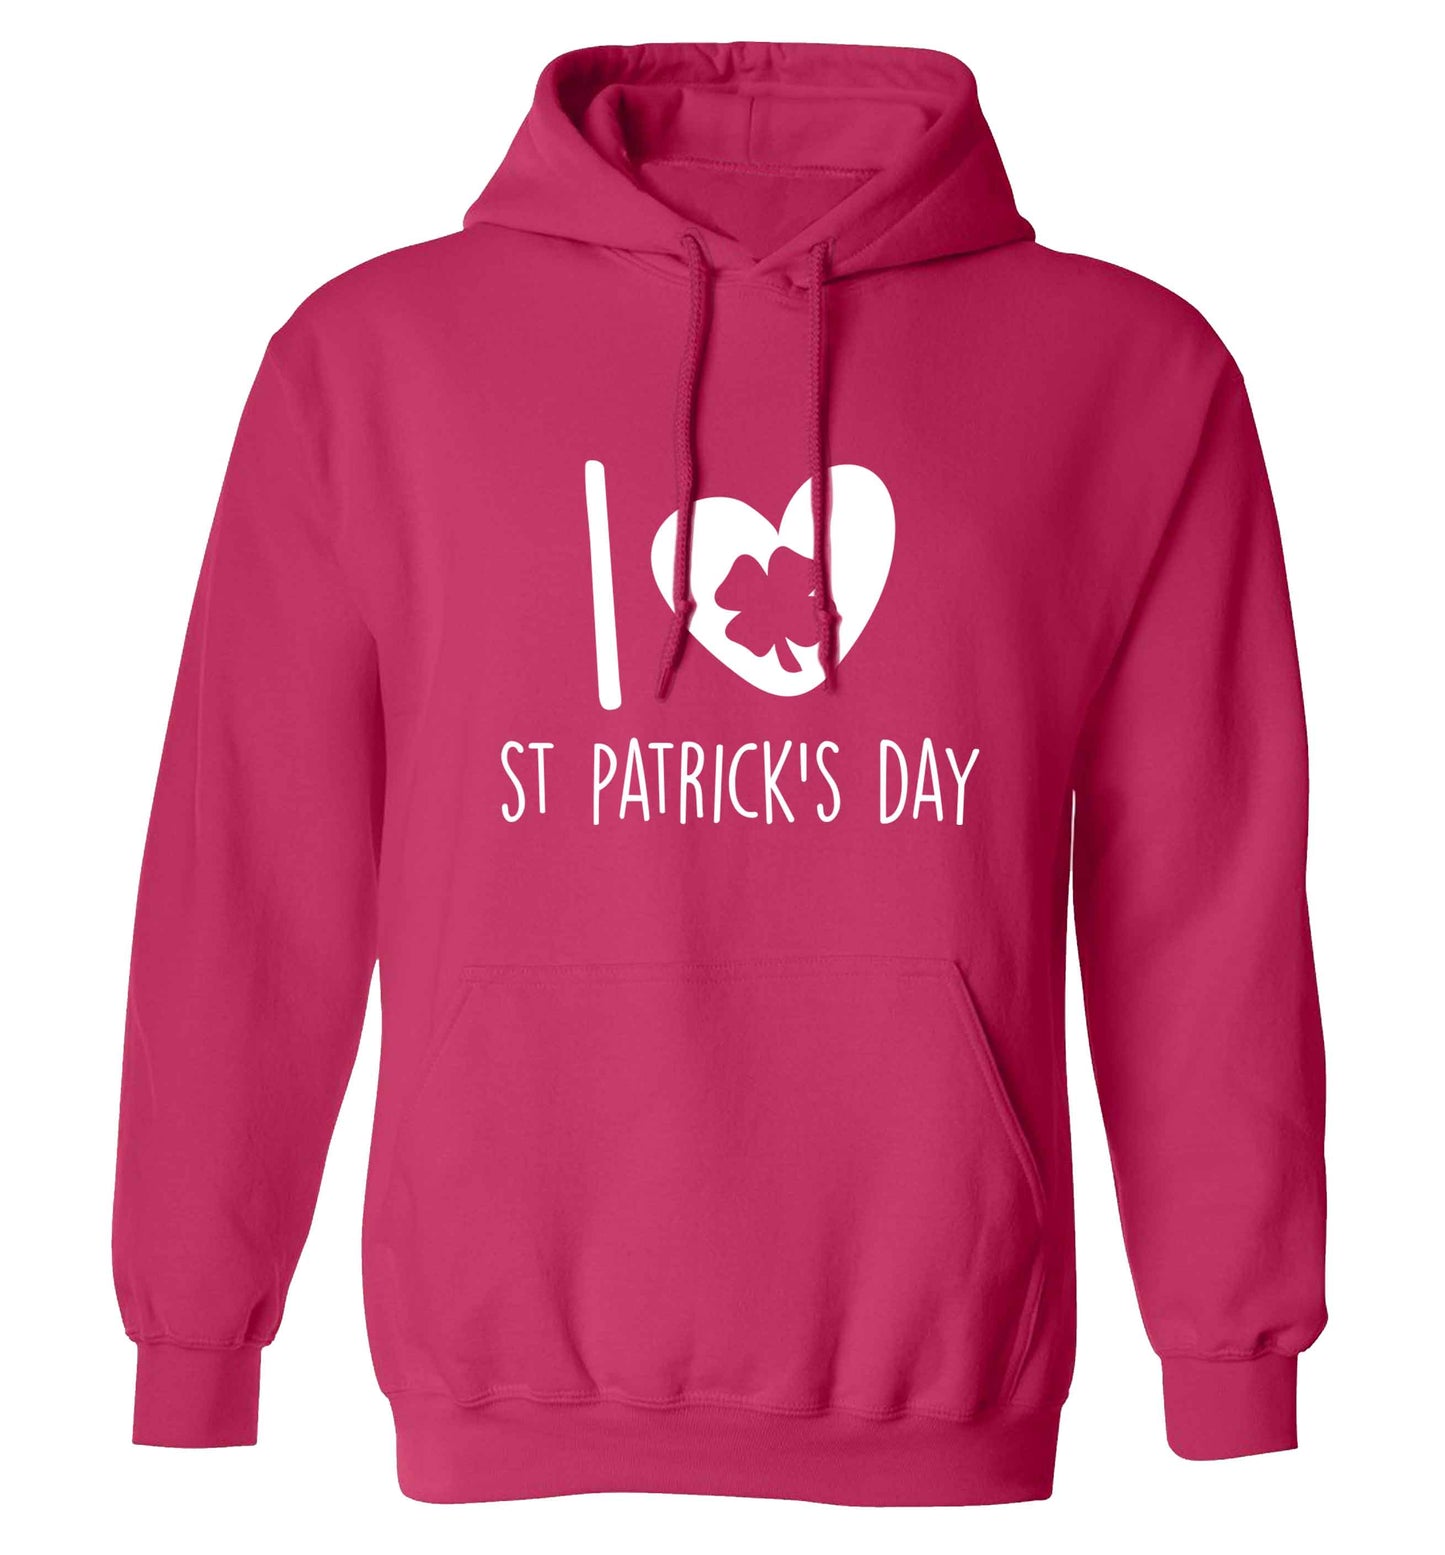 I love St.Patricks day adults unisex pink hoodie 2XL